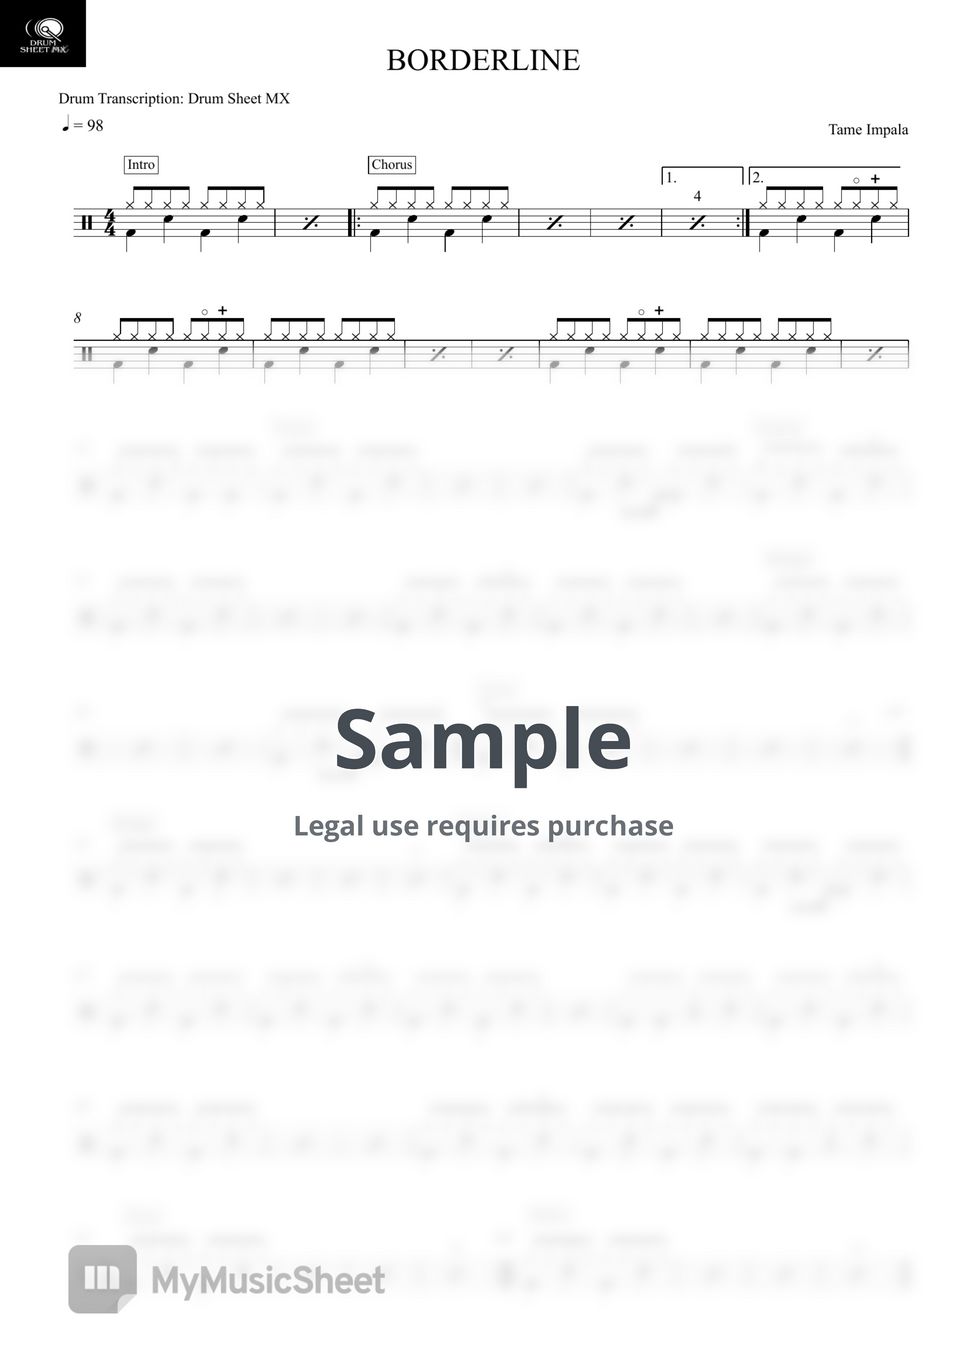 Tame Impala - BORDERLINE by Drum Transcription: Drum Sheet MX